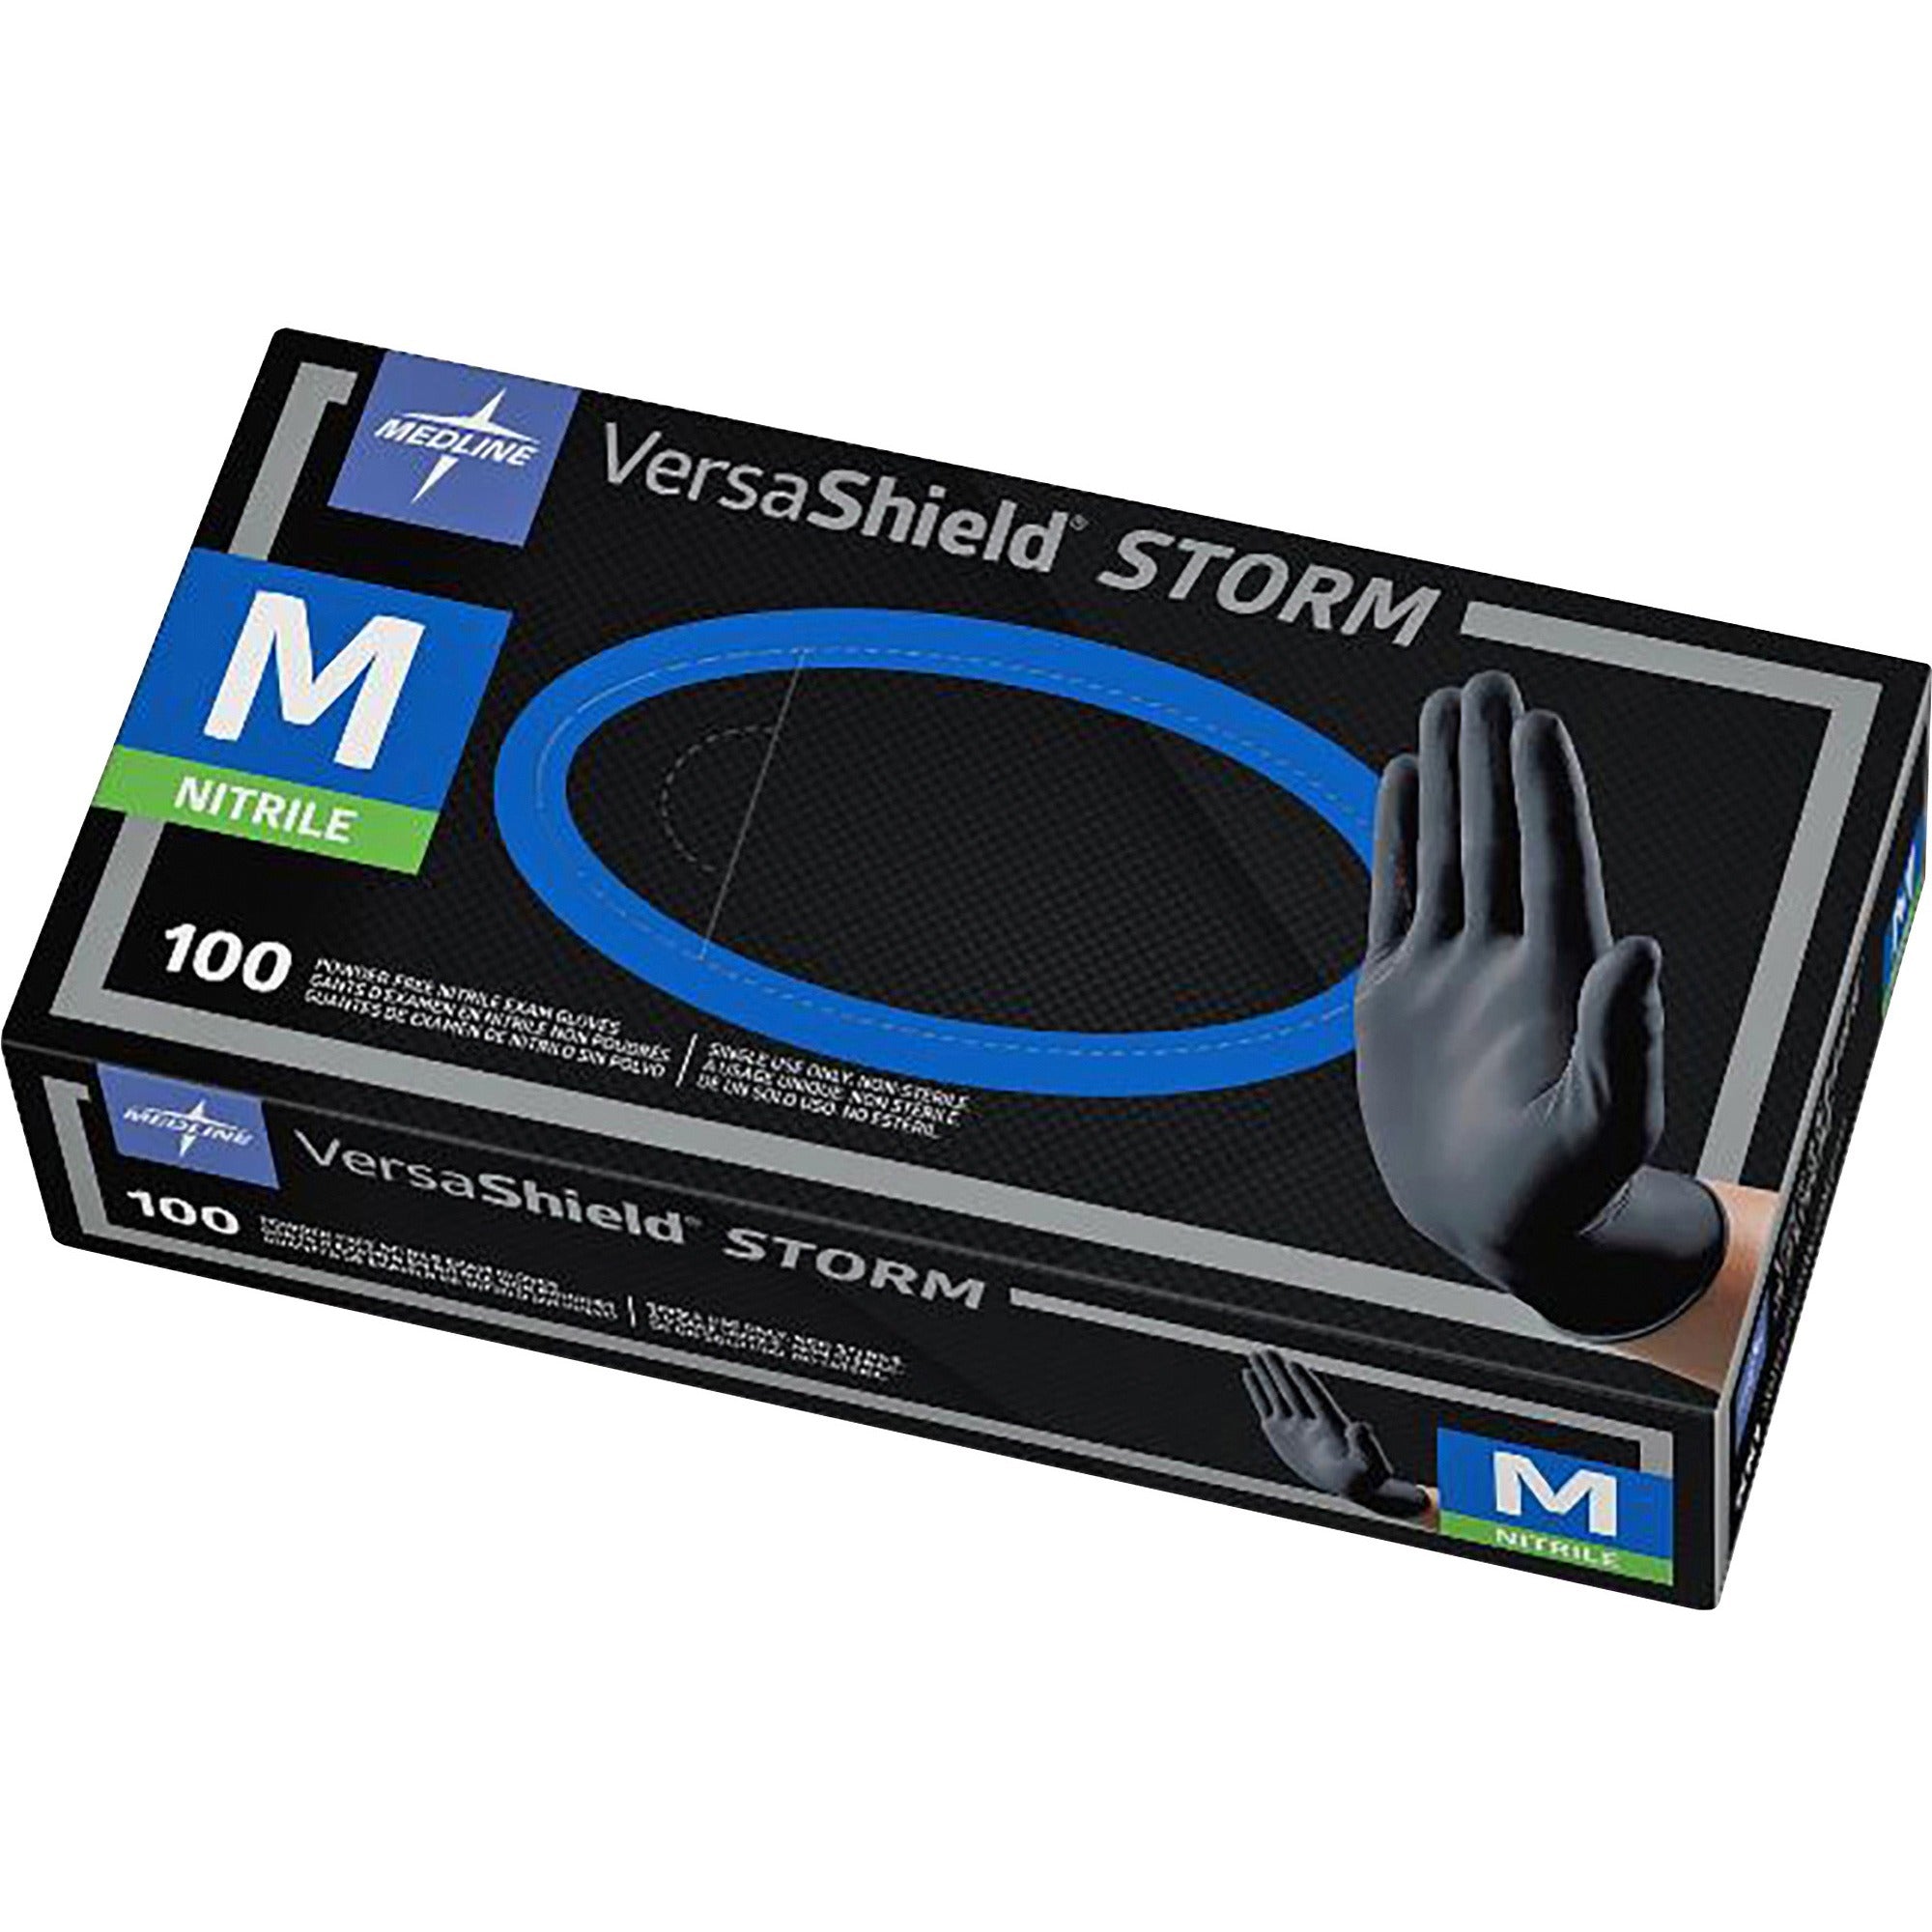 Medline VersaShield STORM Nonsterile Nitrile Gloves - Medium Size - Black - Textured, Latex-free - For Healthcare Working - 100 / Box - 